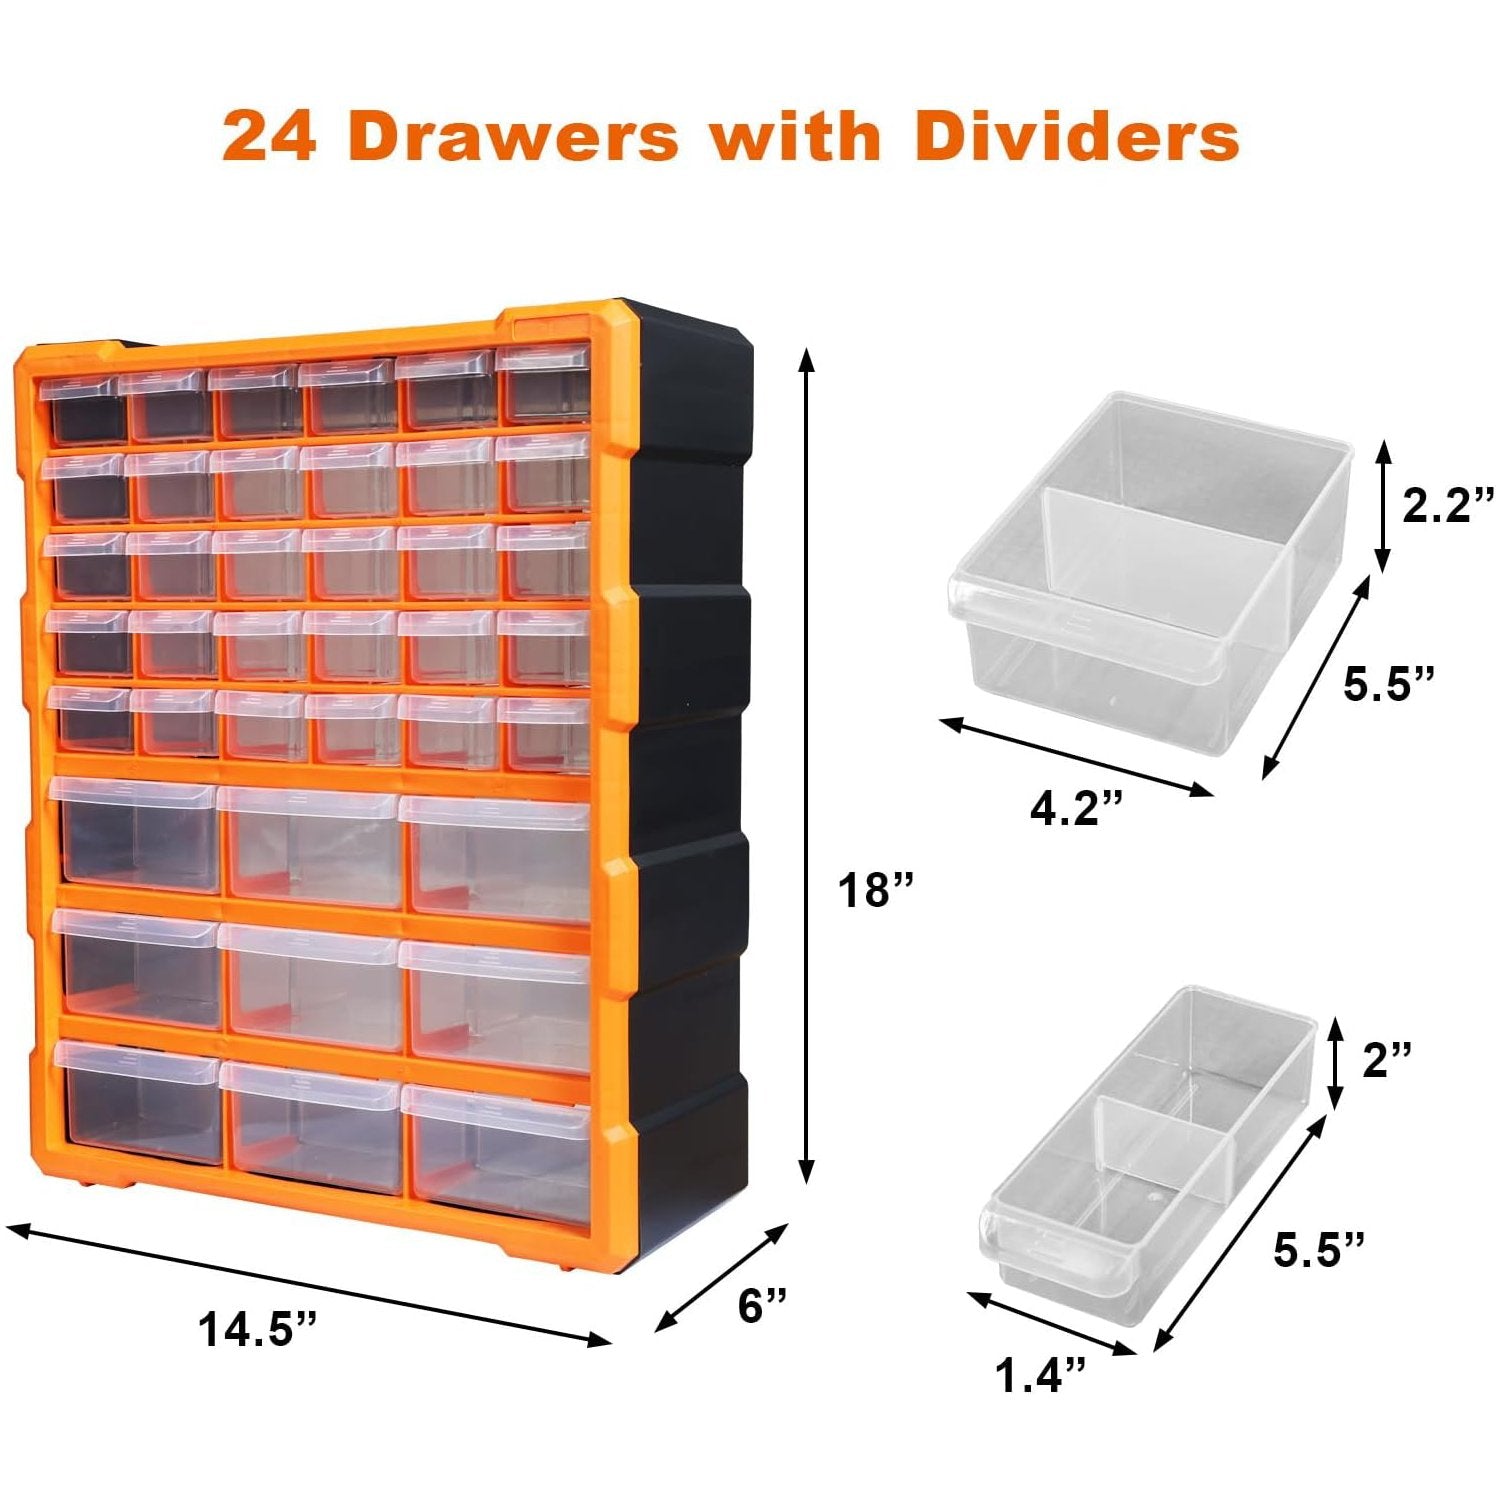 big-red-39-drawer-storage-cabinet-for-hardware-parts-crafts